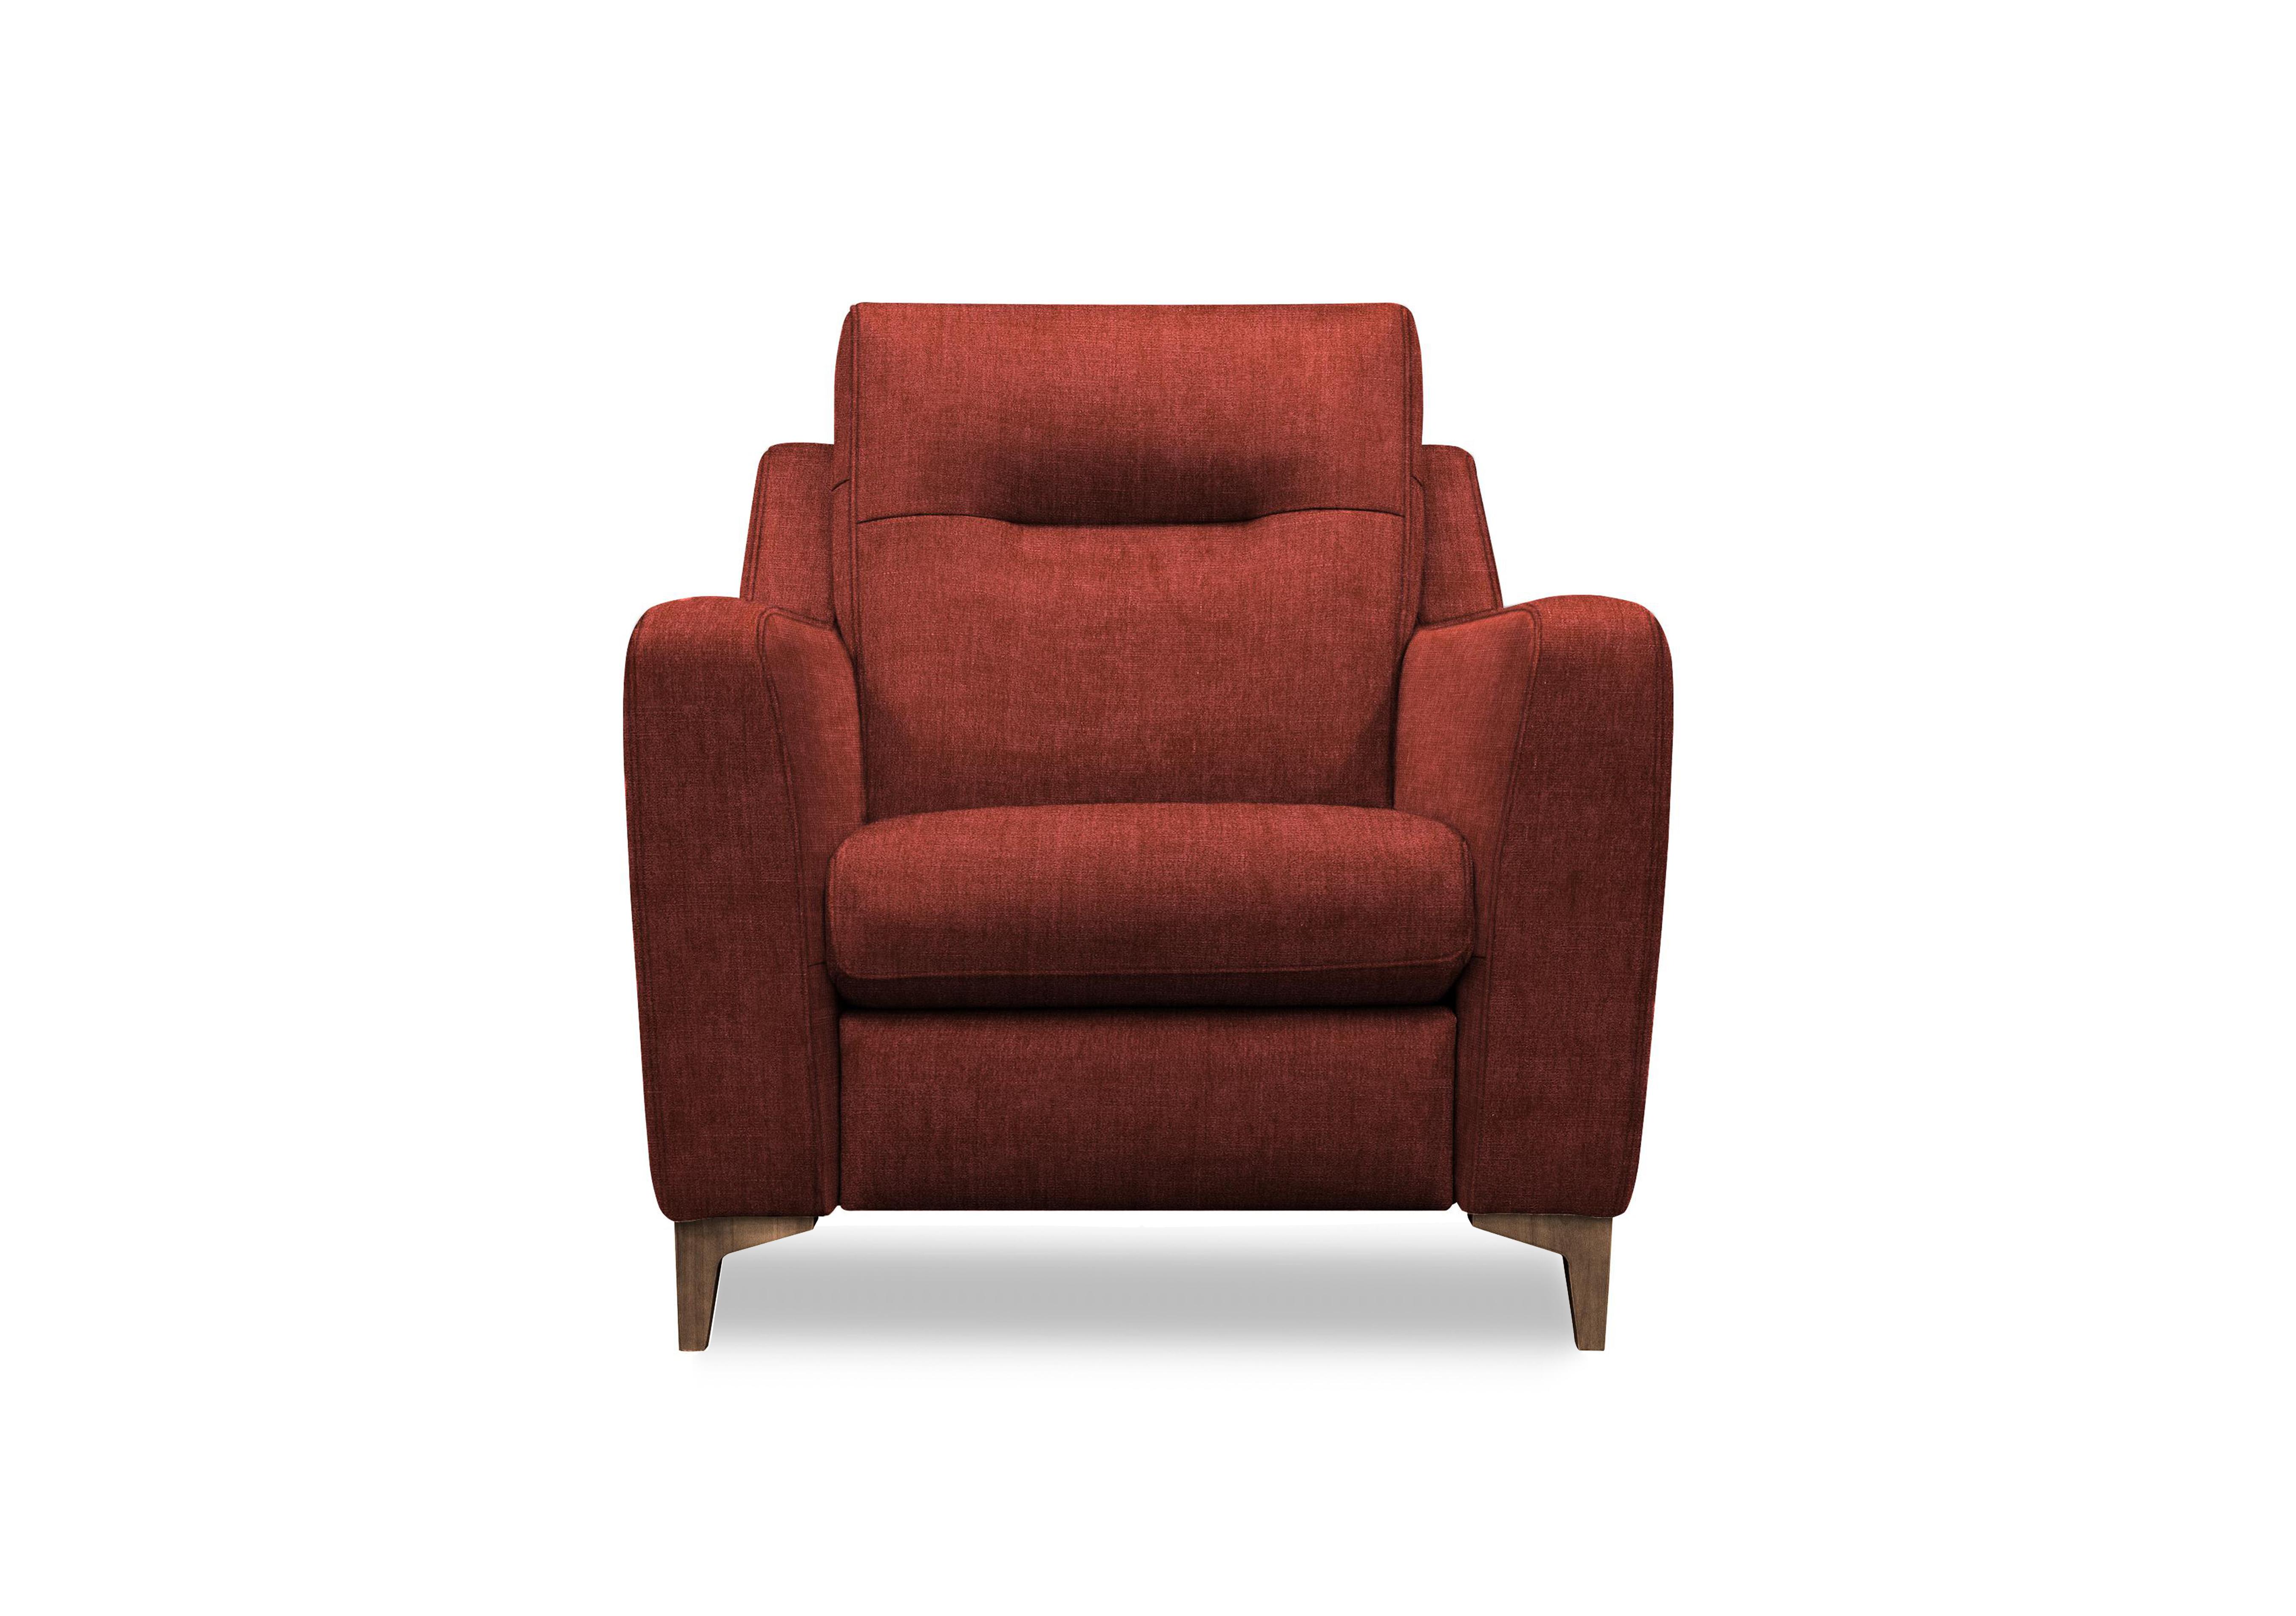 Arlo Fabric Chair in B148 Manhattan Burgundy Wal Ft on Furniture Village